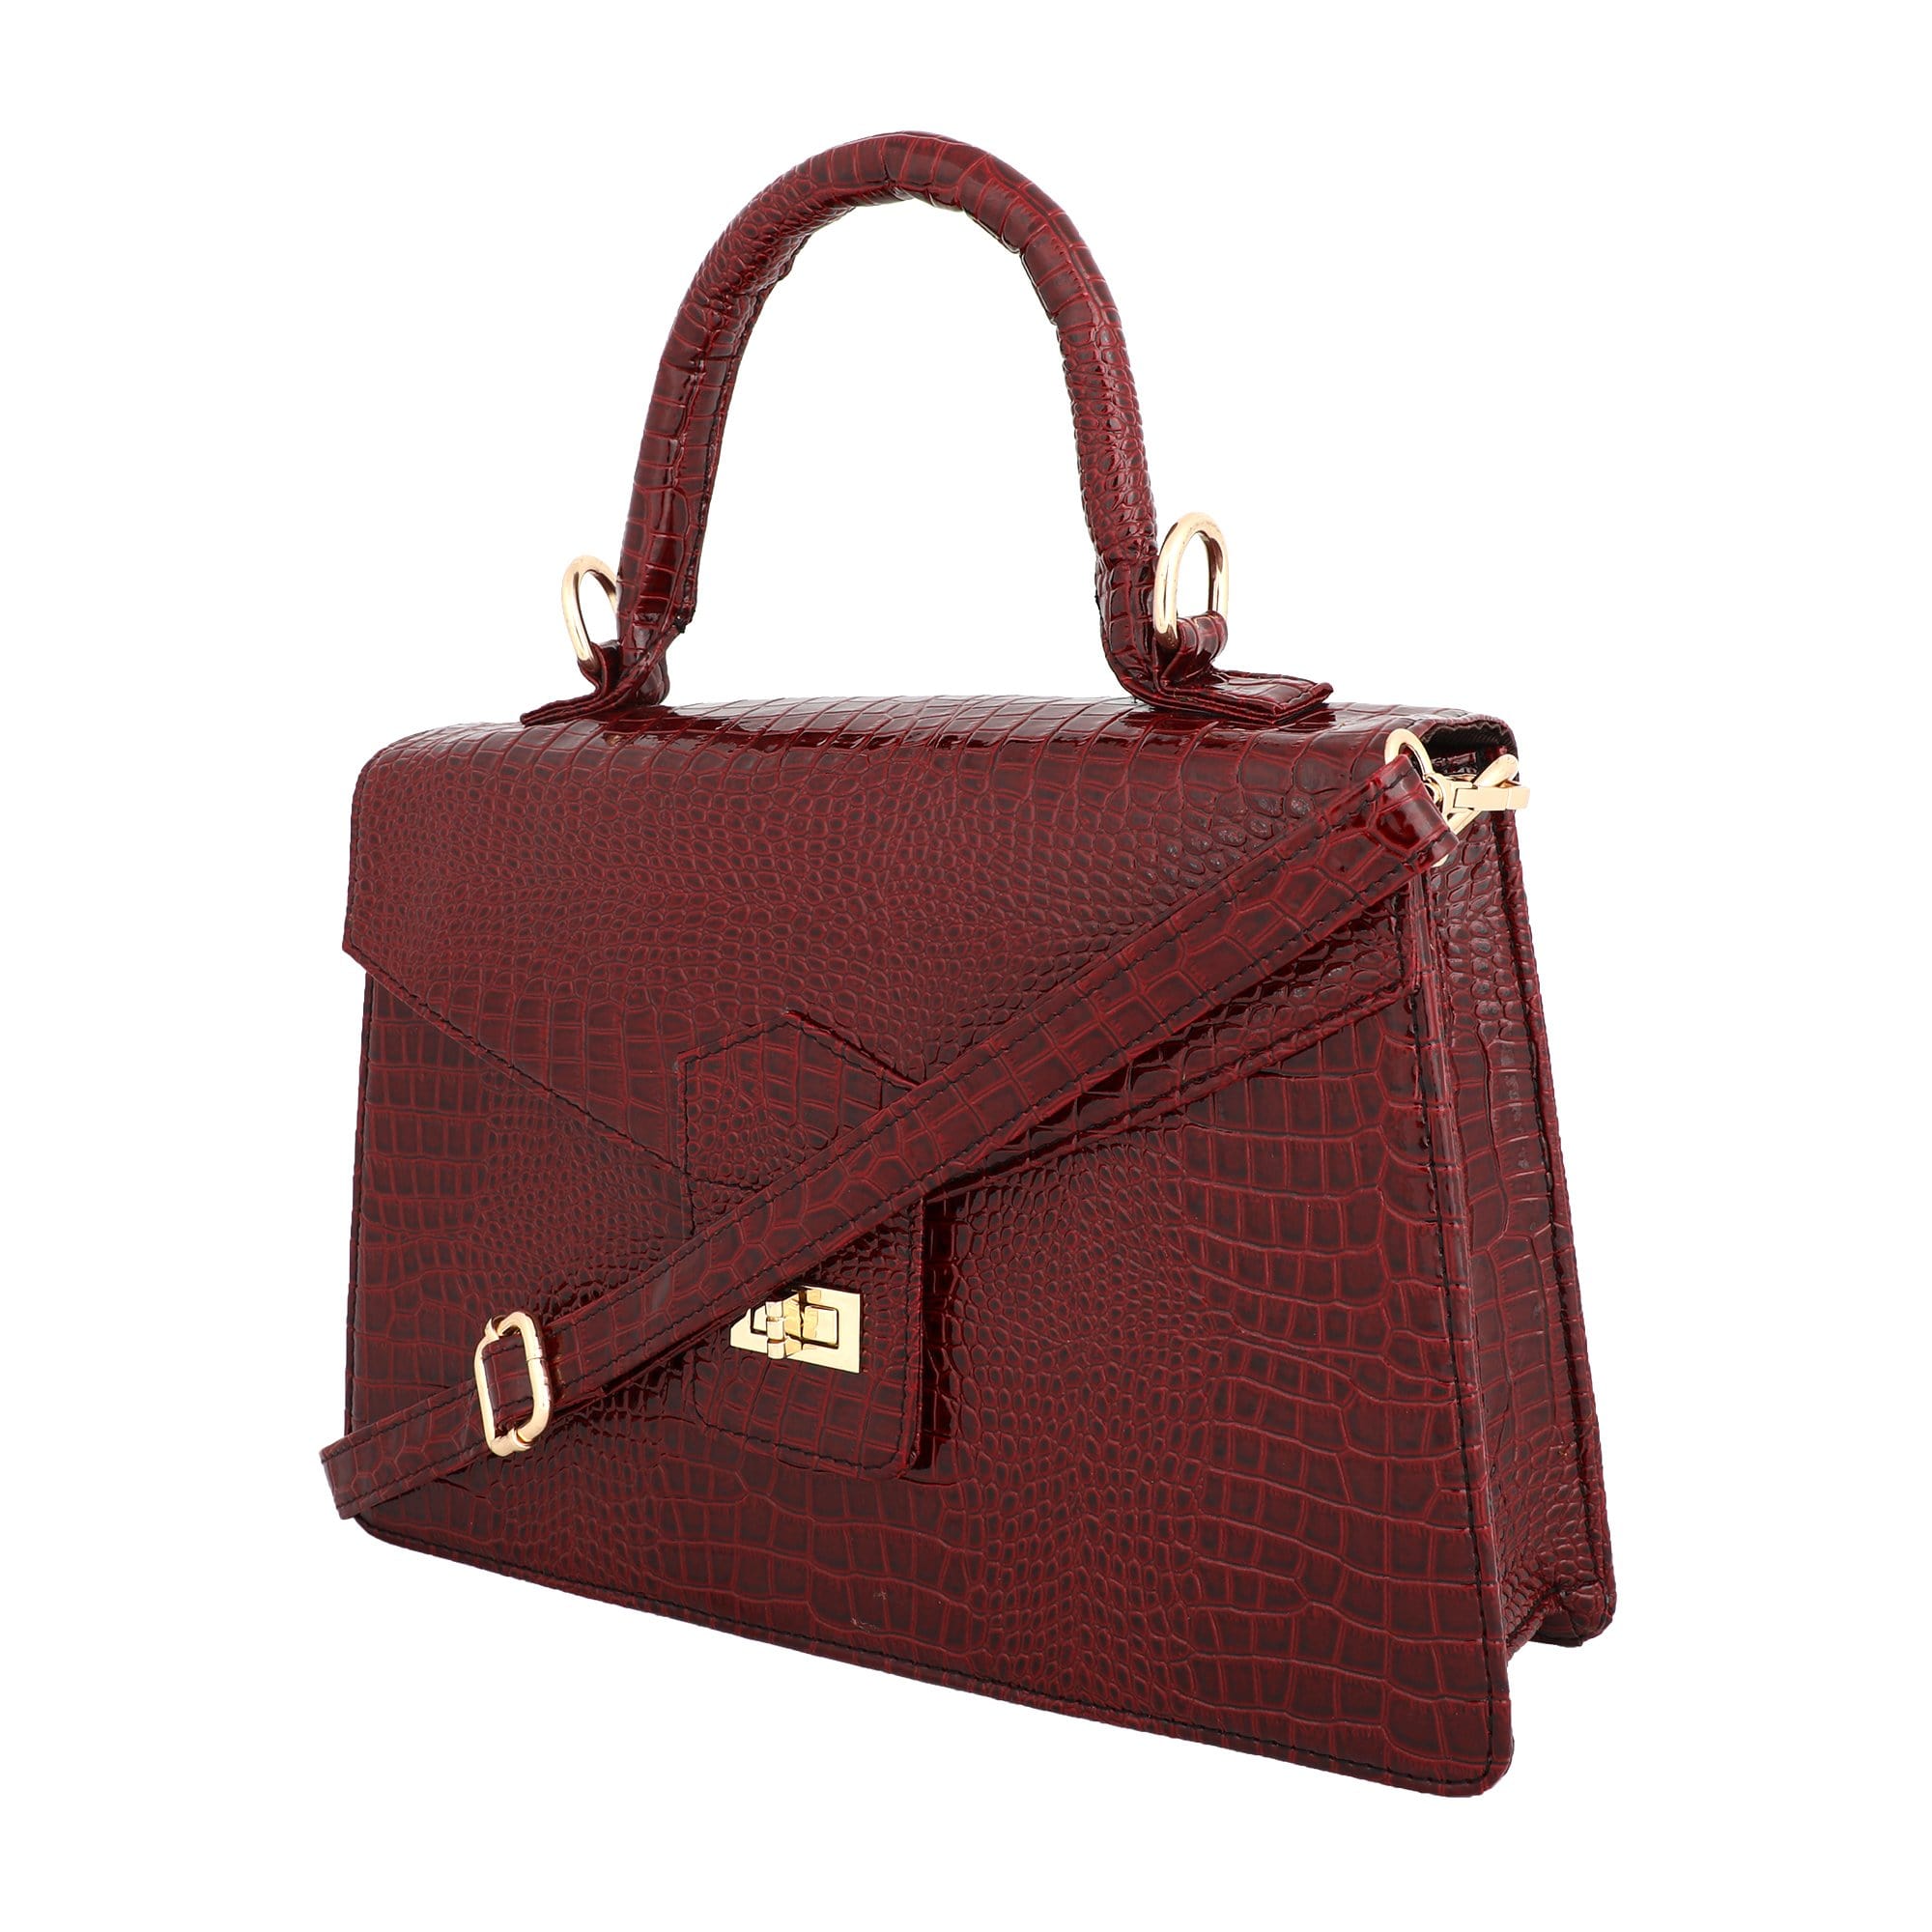 kinnoti Handbags Vegan Croco Leather Satchel Handbag